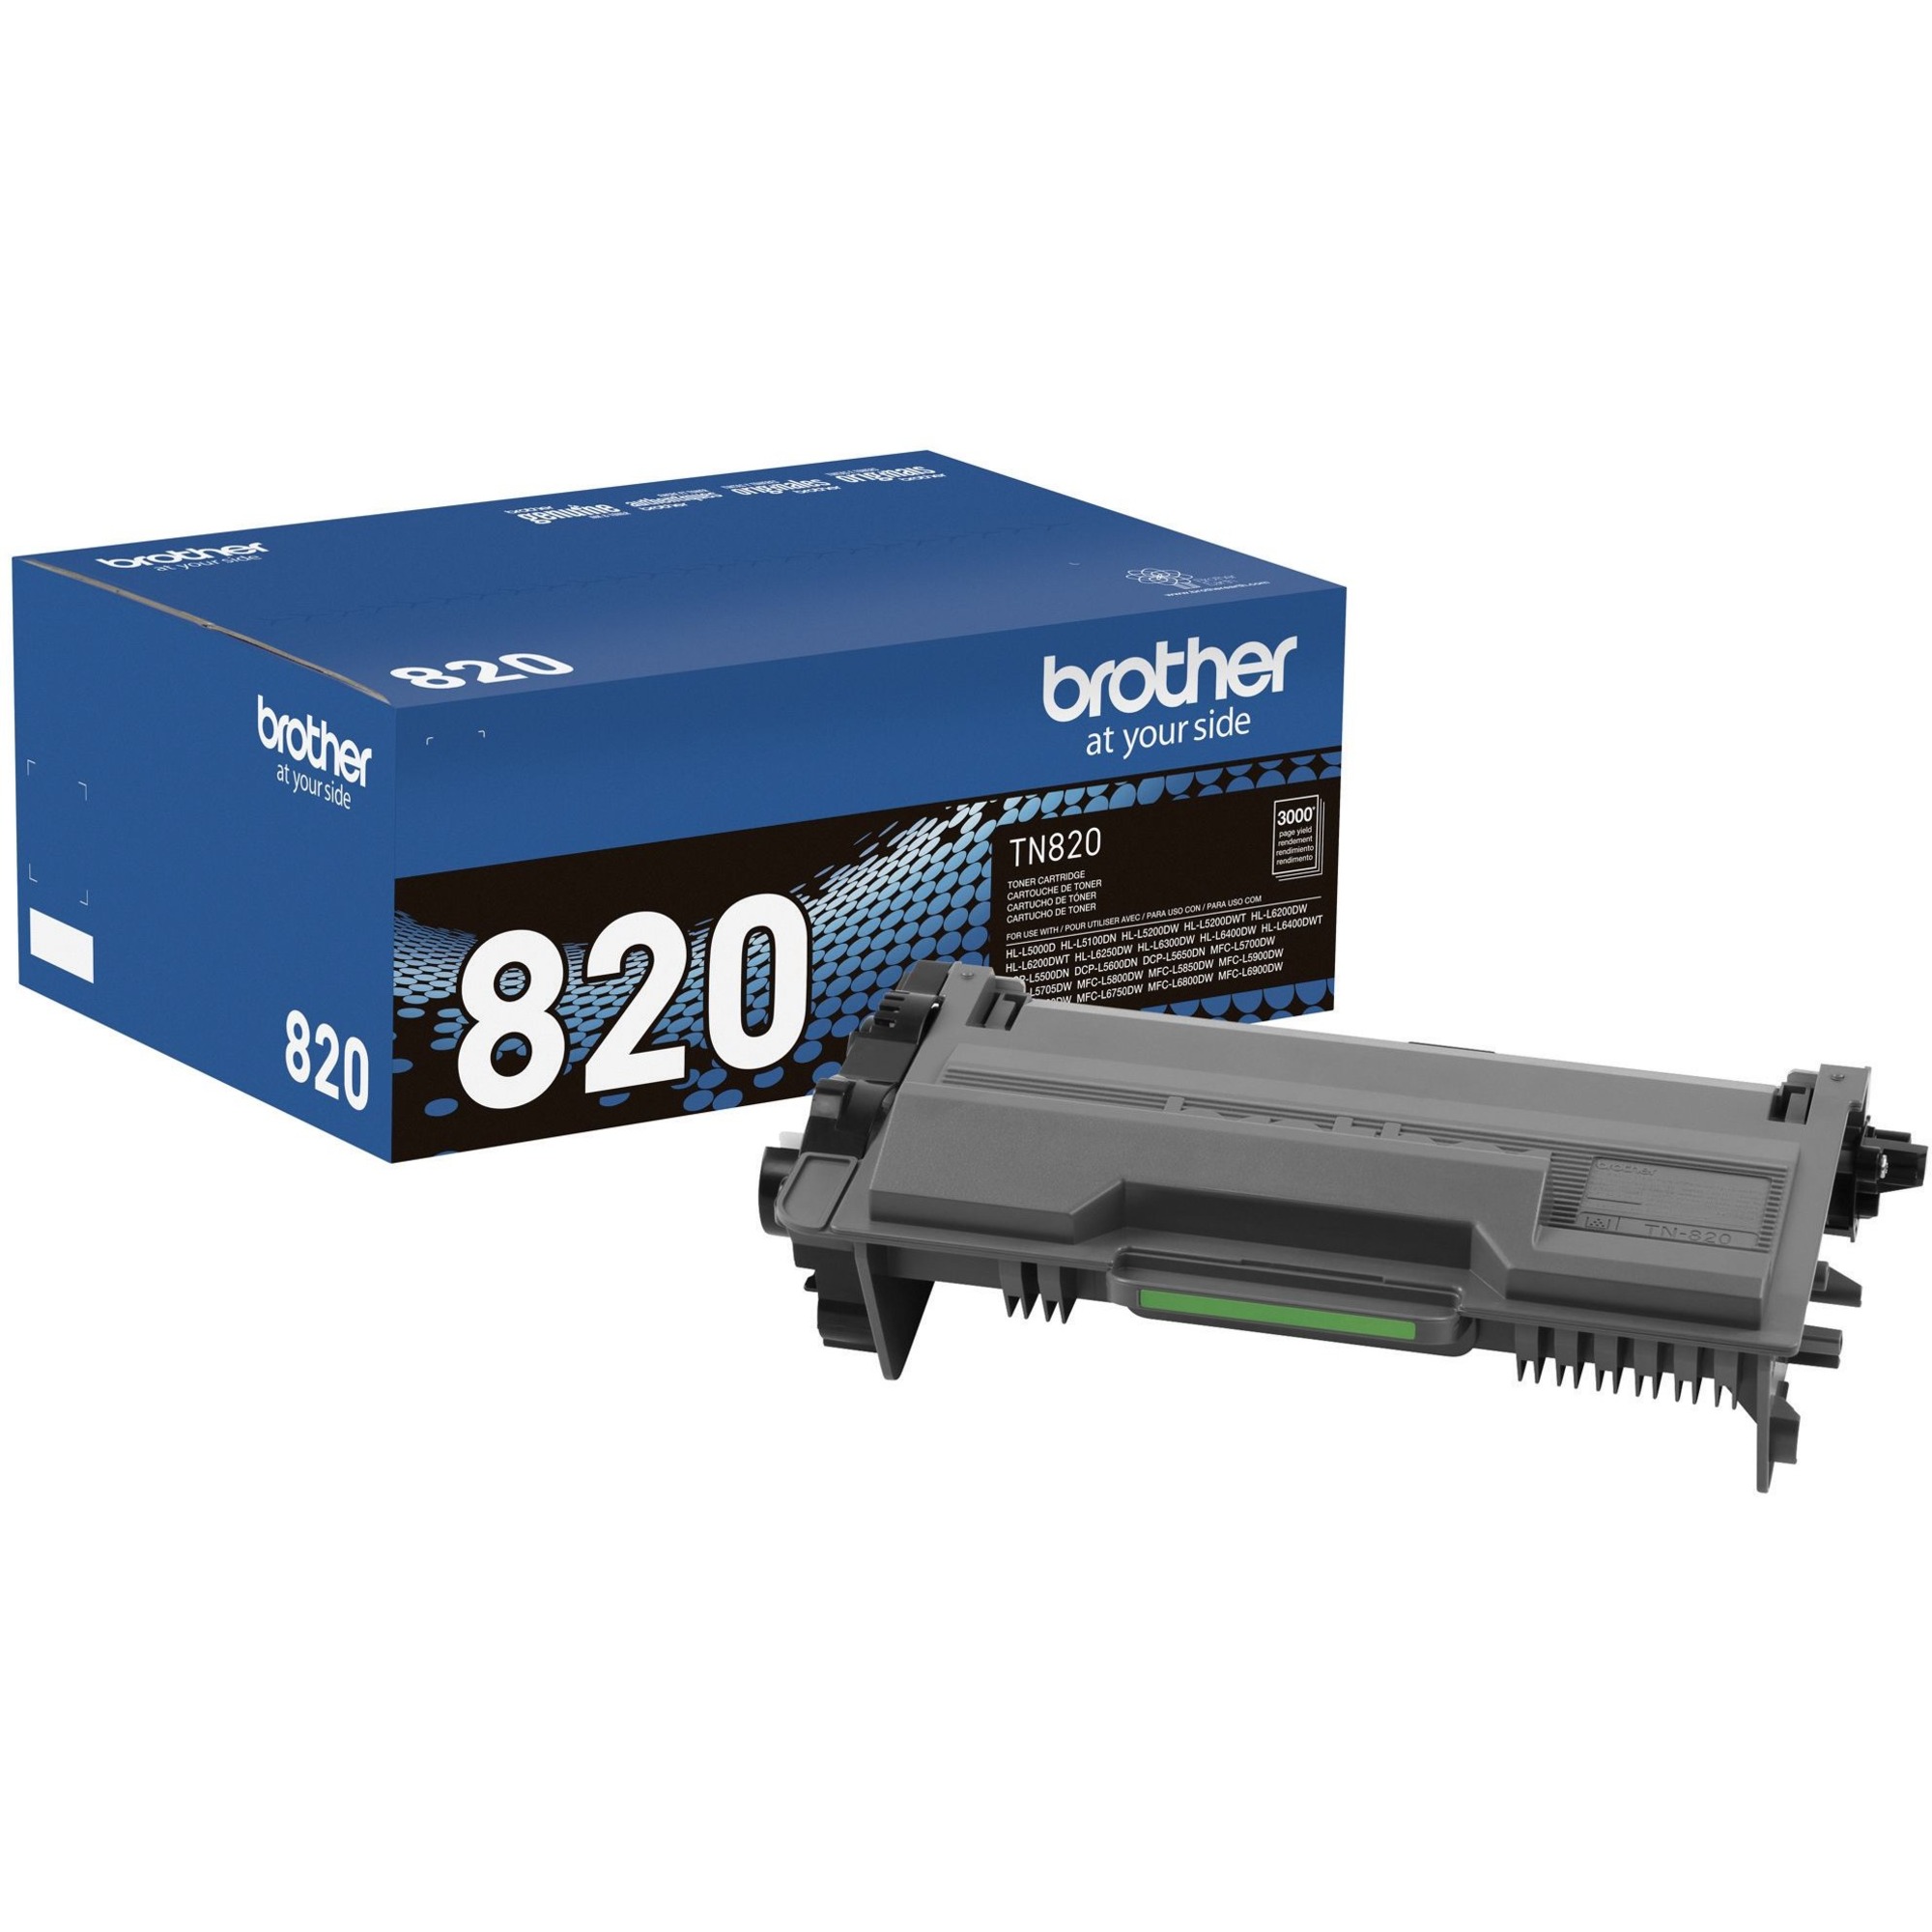 Brother MFC-L5900DW Laser Multifunction Printer - Monochrome - Duplex -  Copier/Fax/Printer/Scanner - 42 ppm Mono Print - 1200 x 1200 dpi Print -  3.7 - Multifunction Printers & Fax Machines, Brother Industries, Ltd